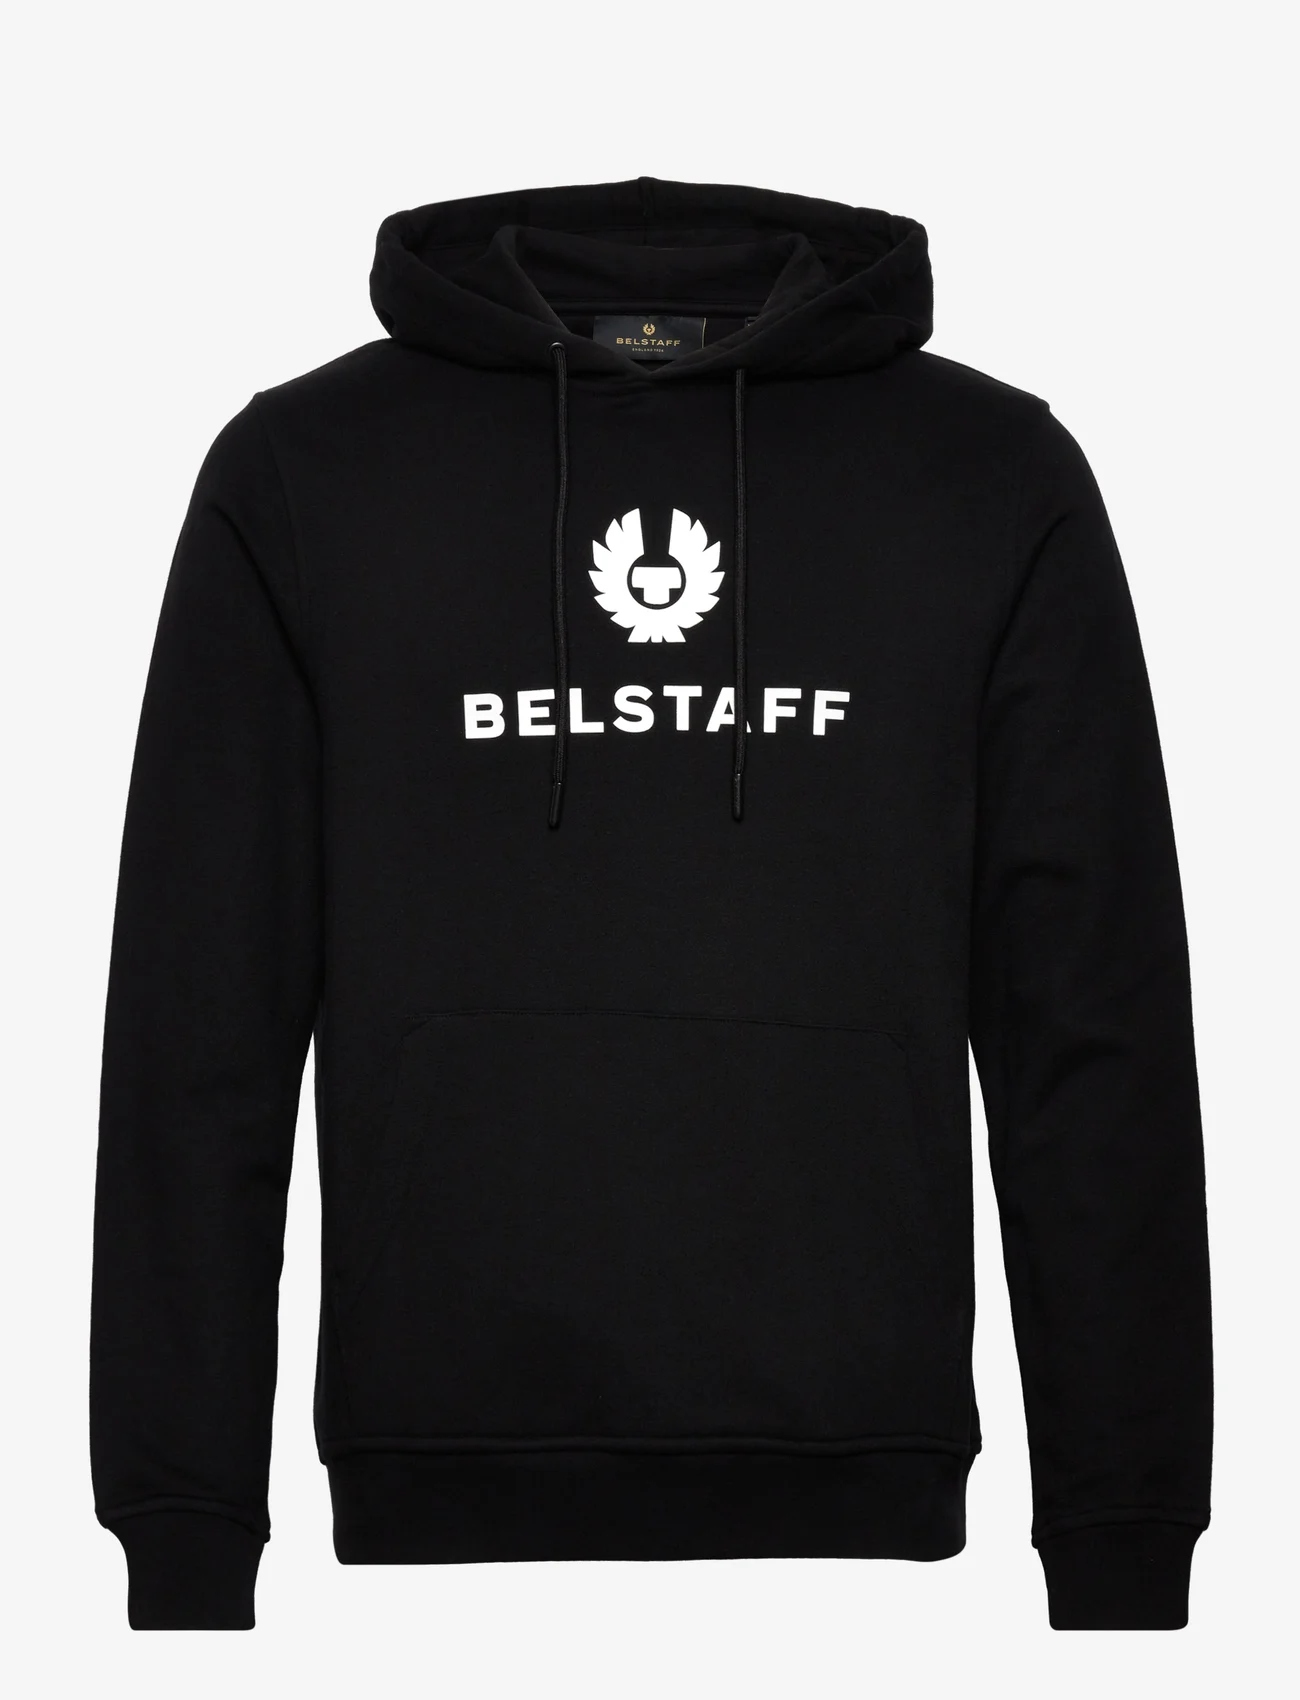 Belstaff - BELSTAFF SIGNATURE HOODIE - kapuzenpullover - black / off white - 0